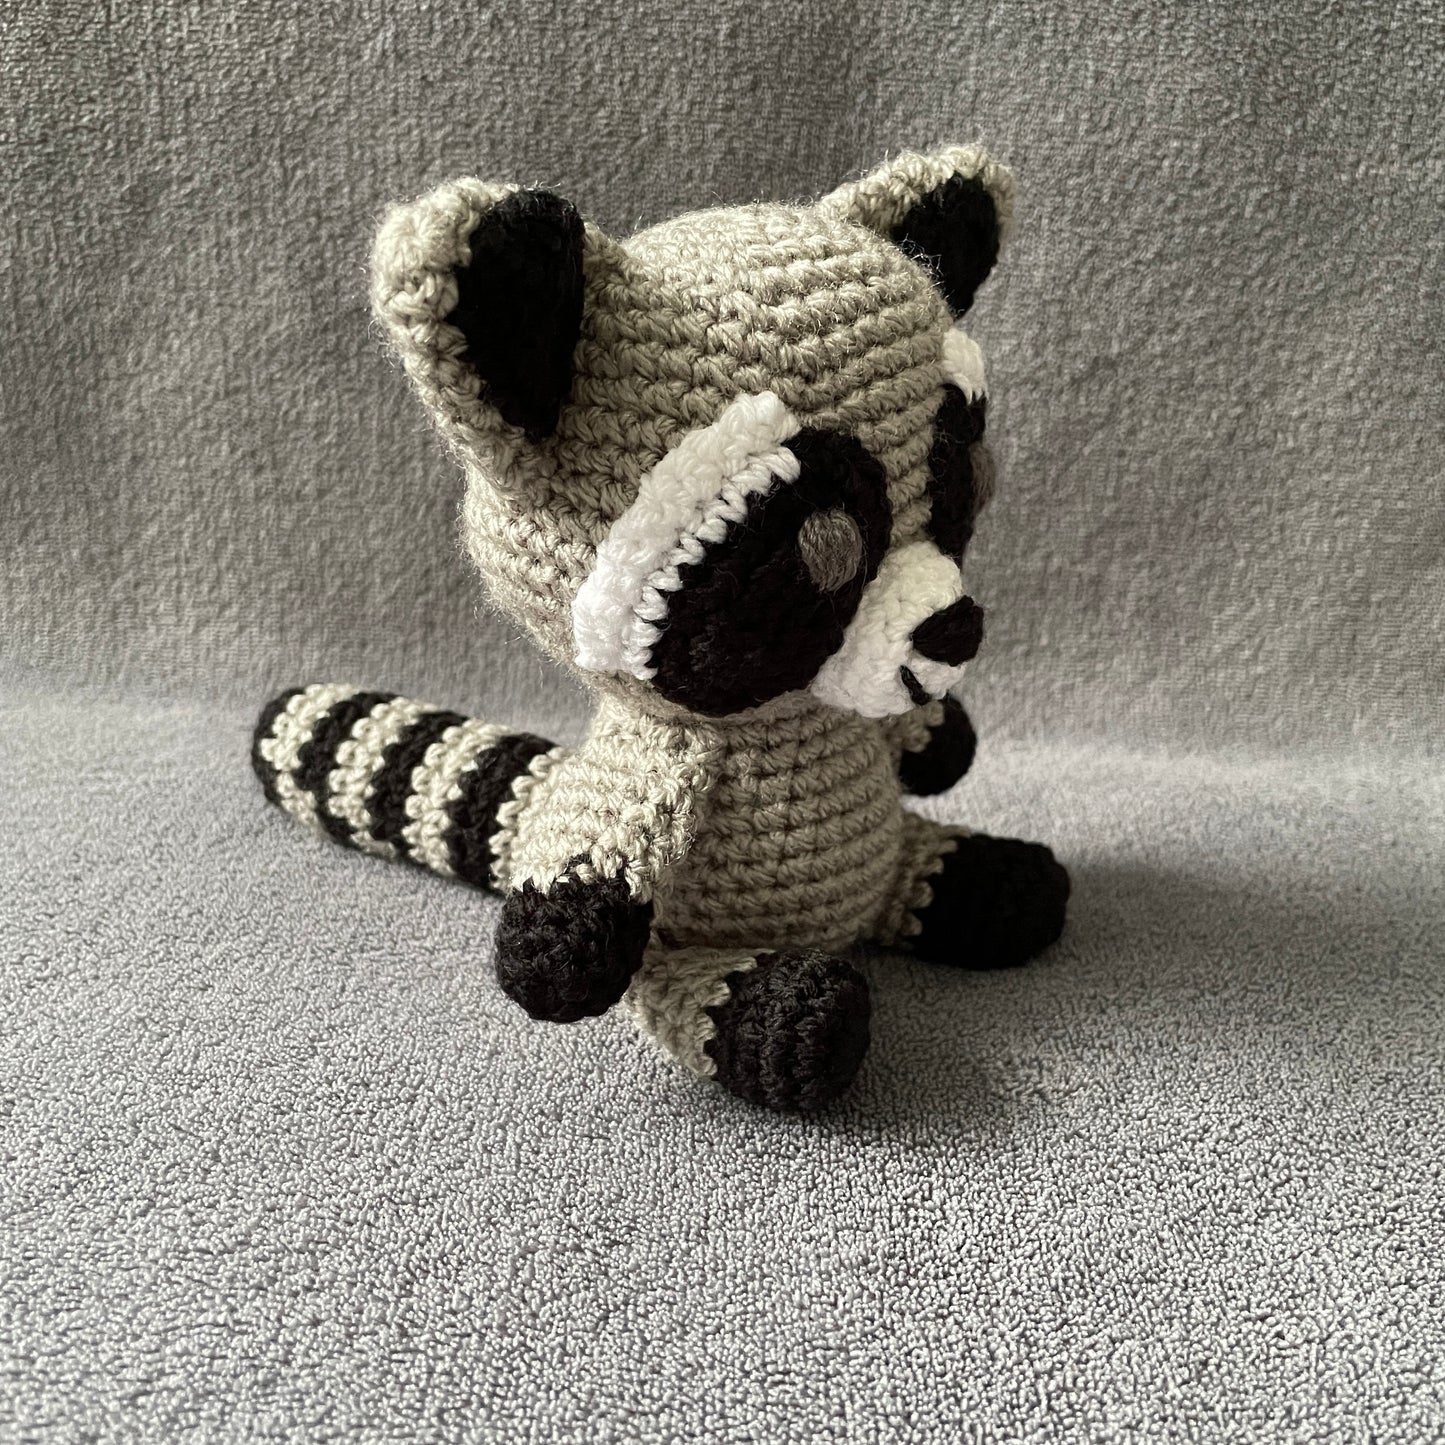 Ralph the Raccoon Soft Toy